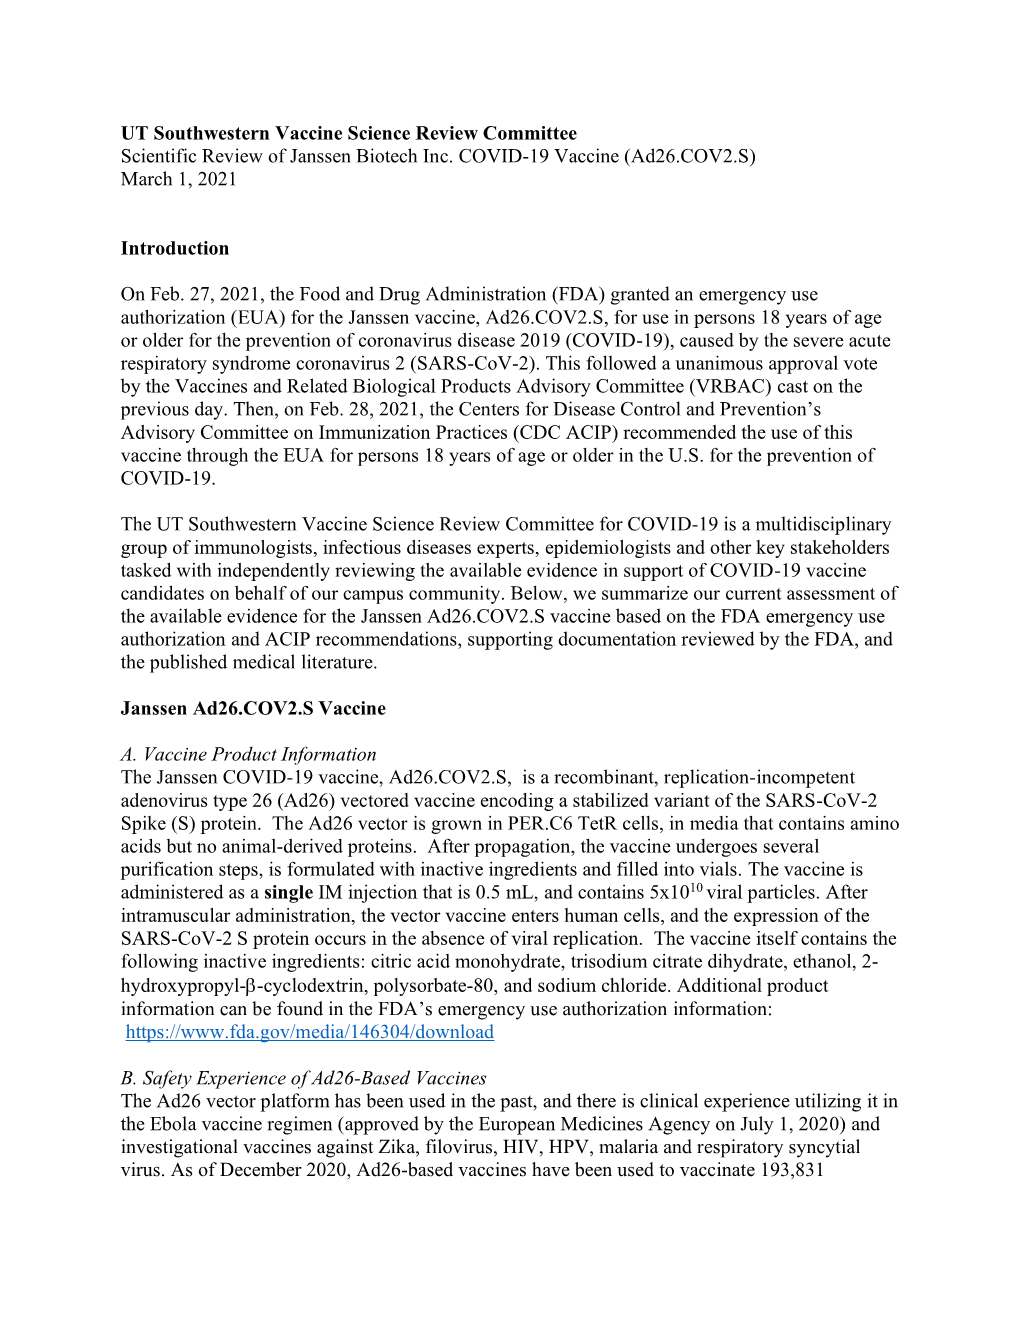 Scientific Review of Janssen Biotech Inc. COVID-19 Vaccine (Ad26.COV2.S) March 1, 2021